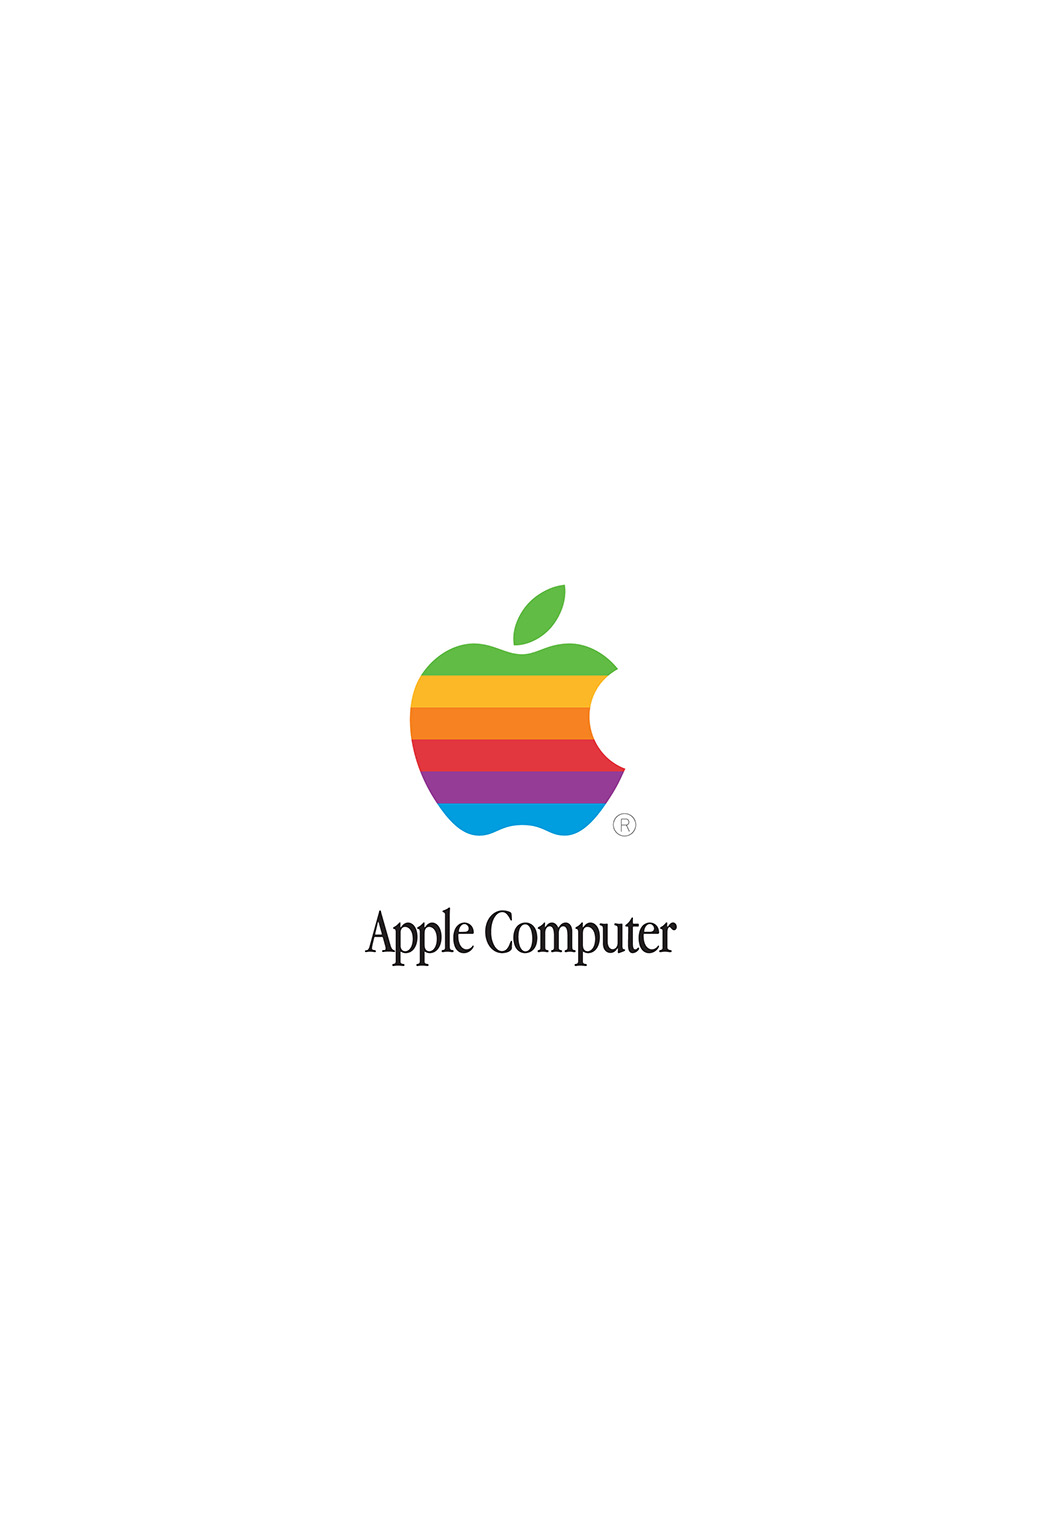 Wallpaper of the week: Apple logos